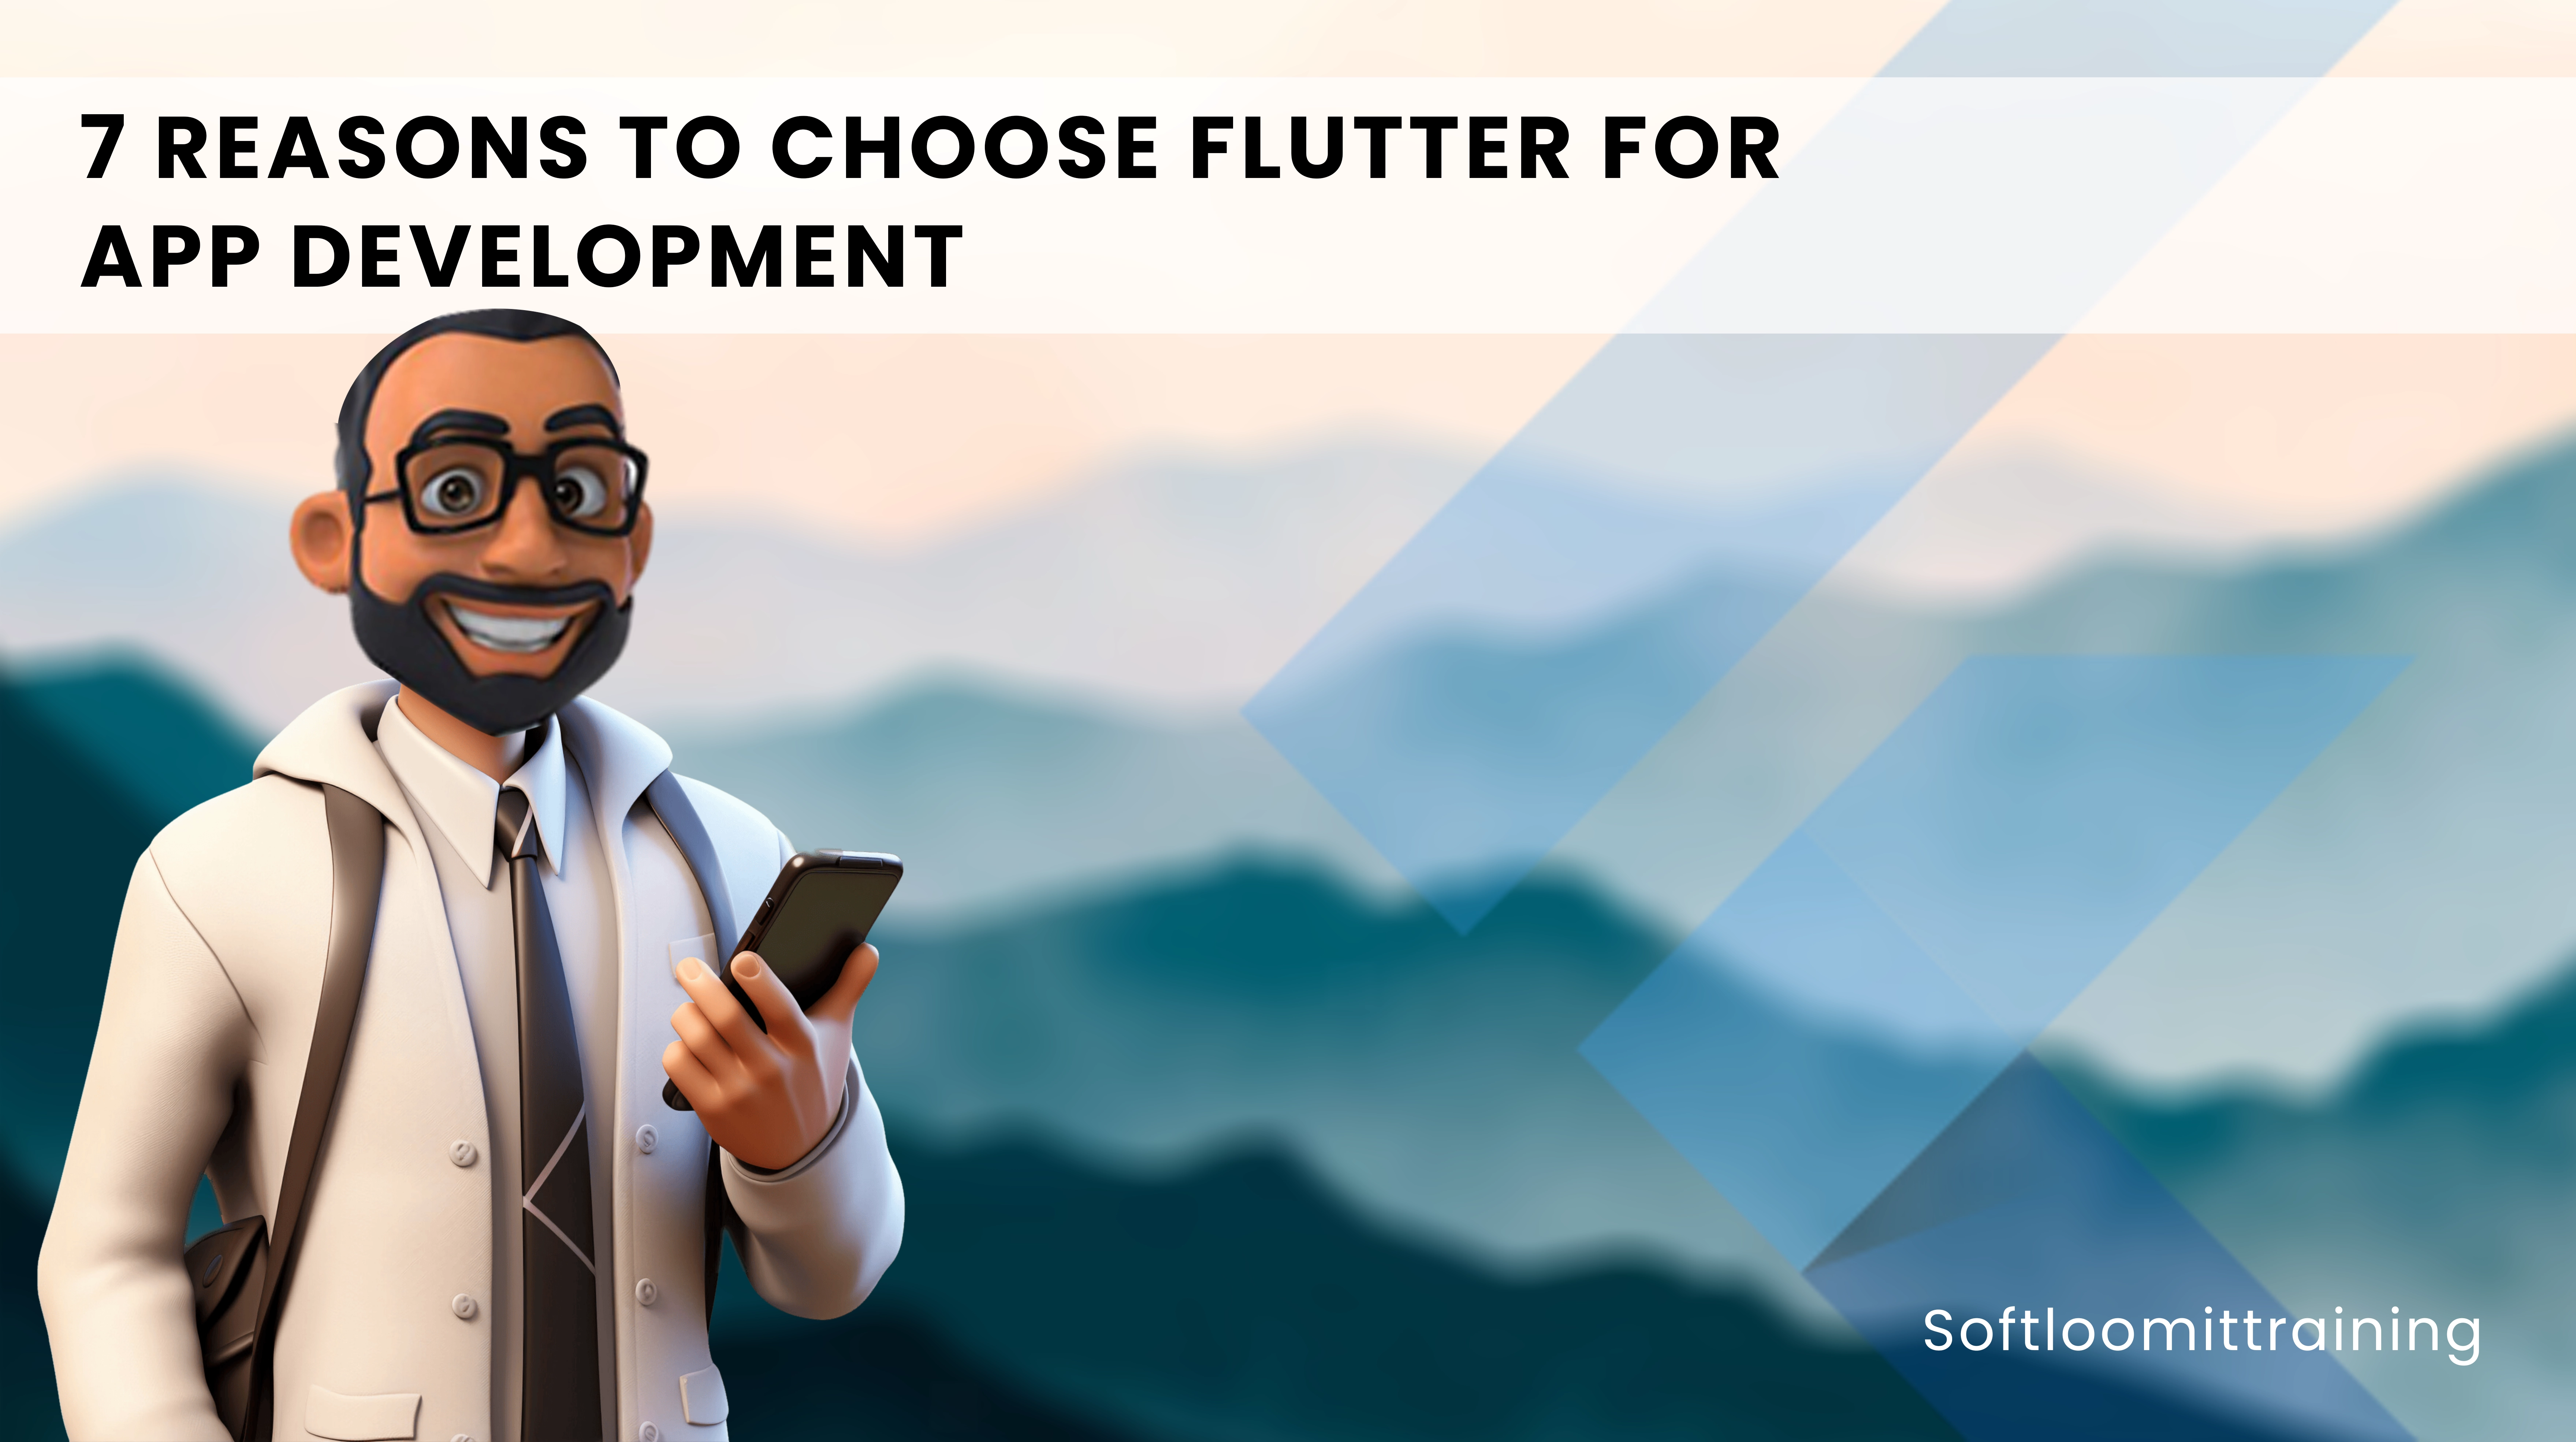 Reasons To Choose Flutter for App Development